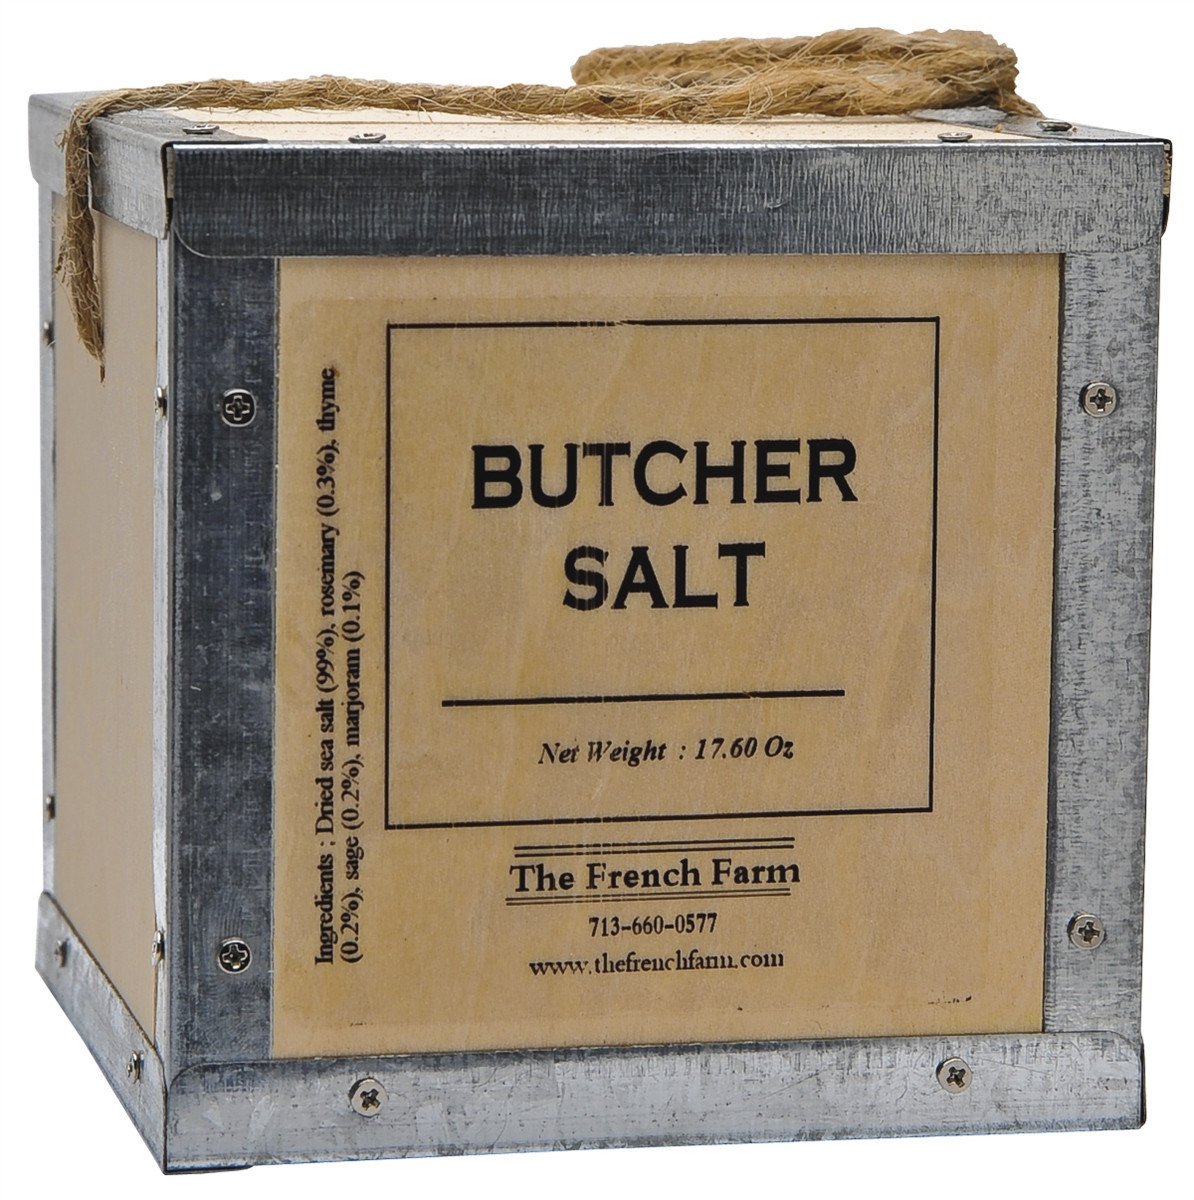 Butcher Salt in Wooden Box - r. h. ballard shop